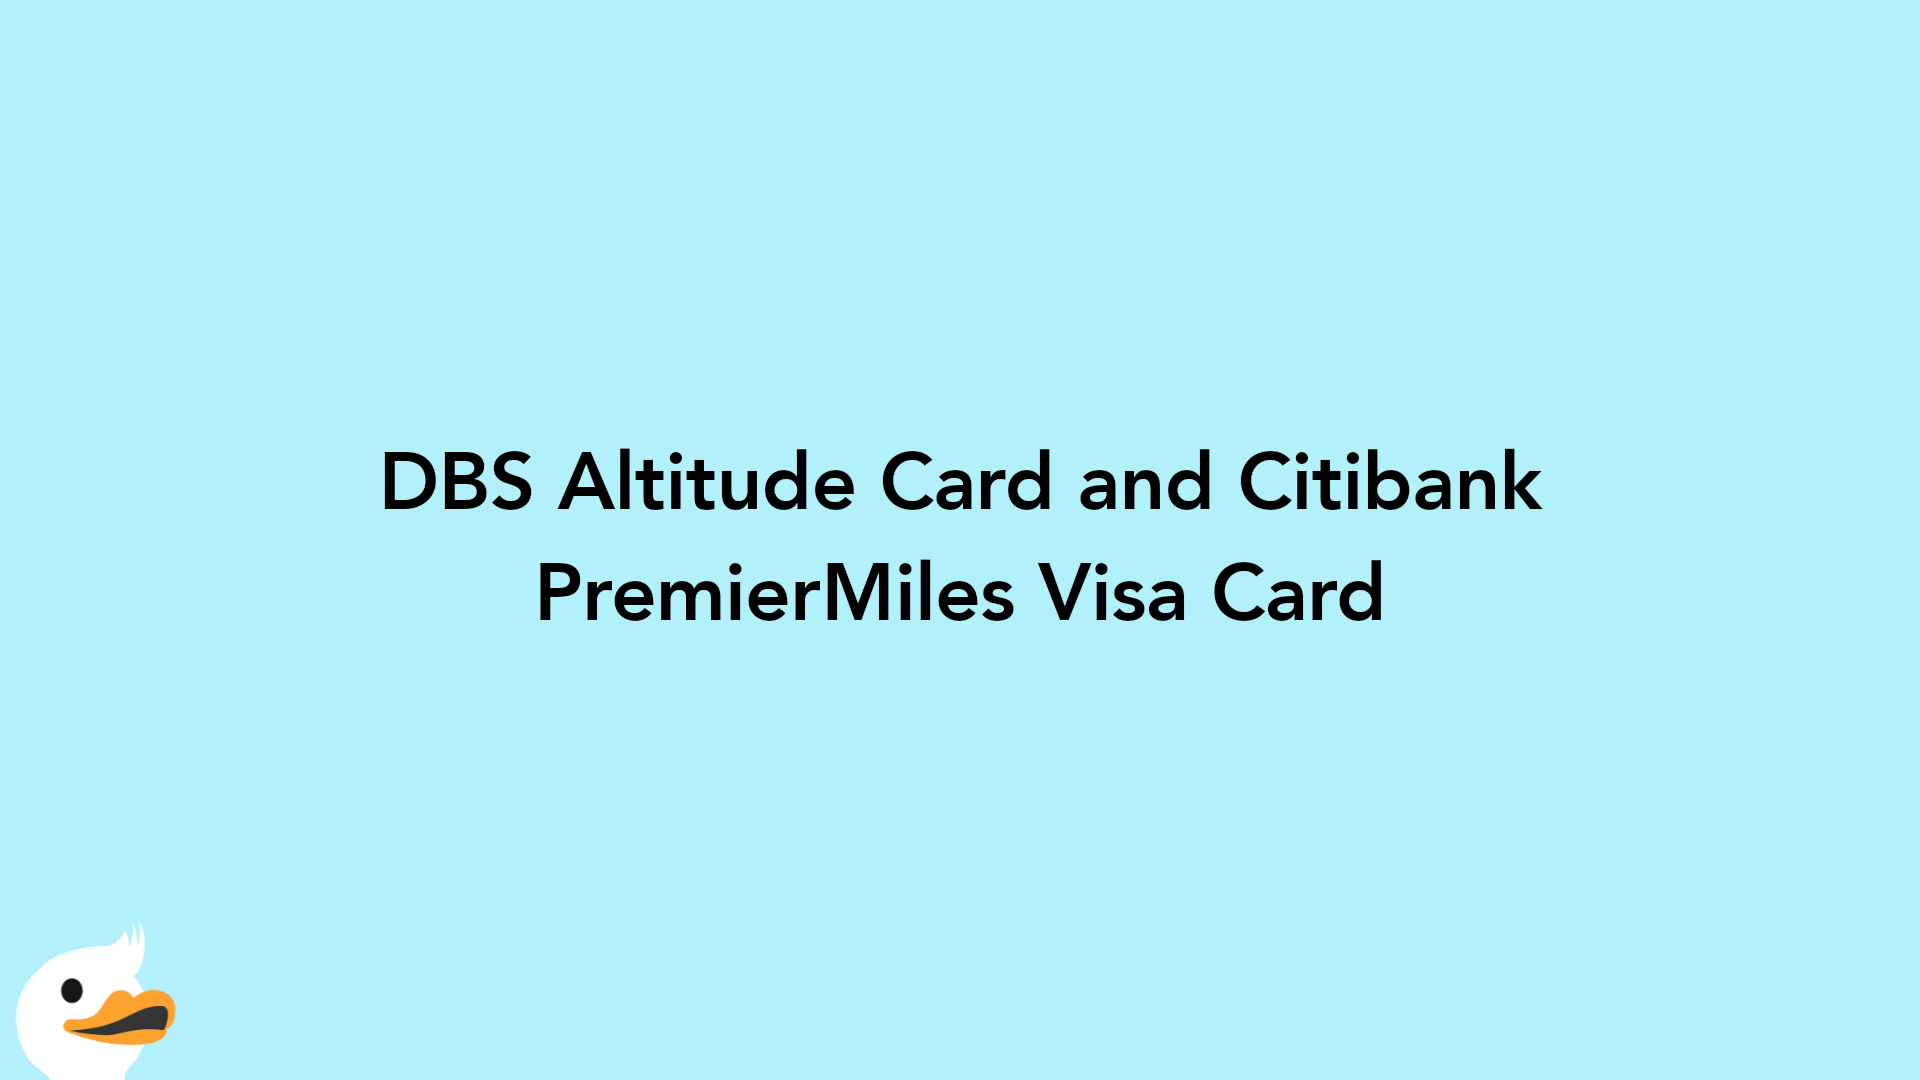 DBS Altitude Card and Citibank PremierMiles Visa Card